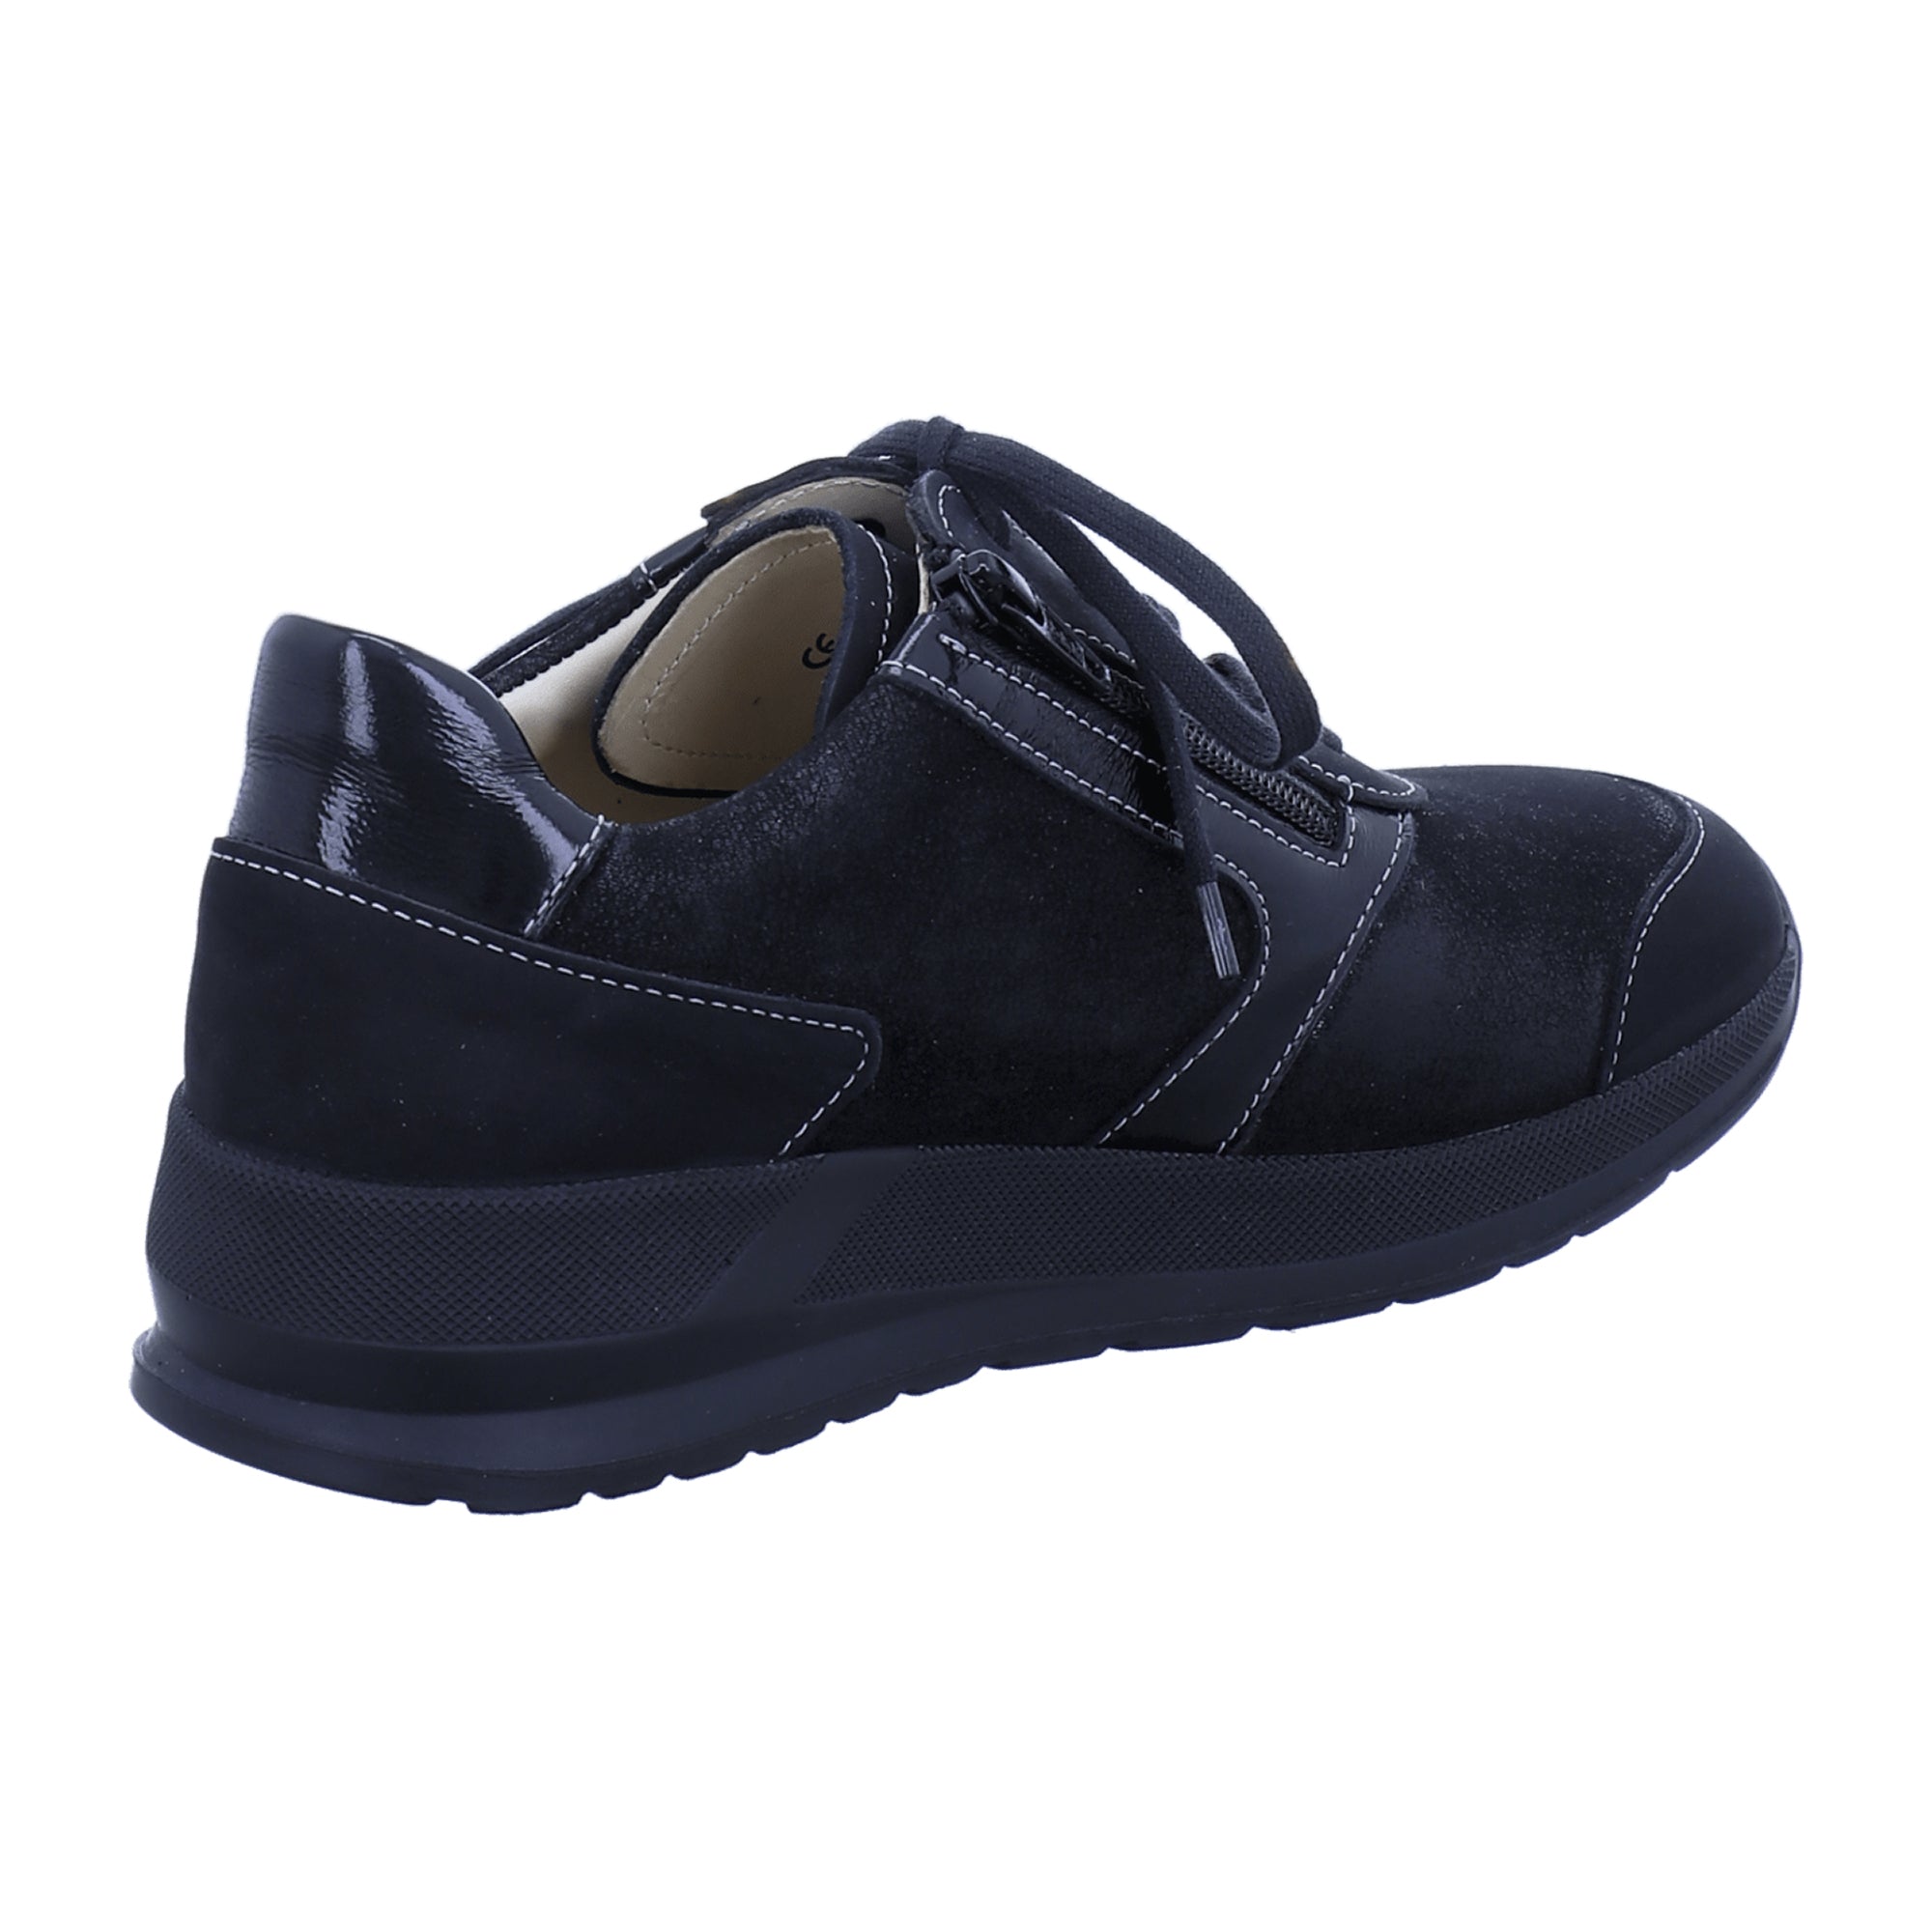 Finn Comfort Mori Women's Black Comfort Shoes - Stylish & Durable